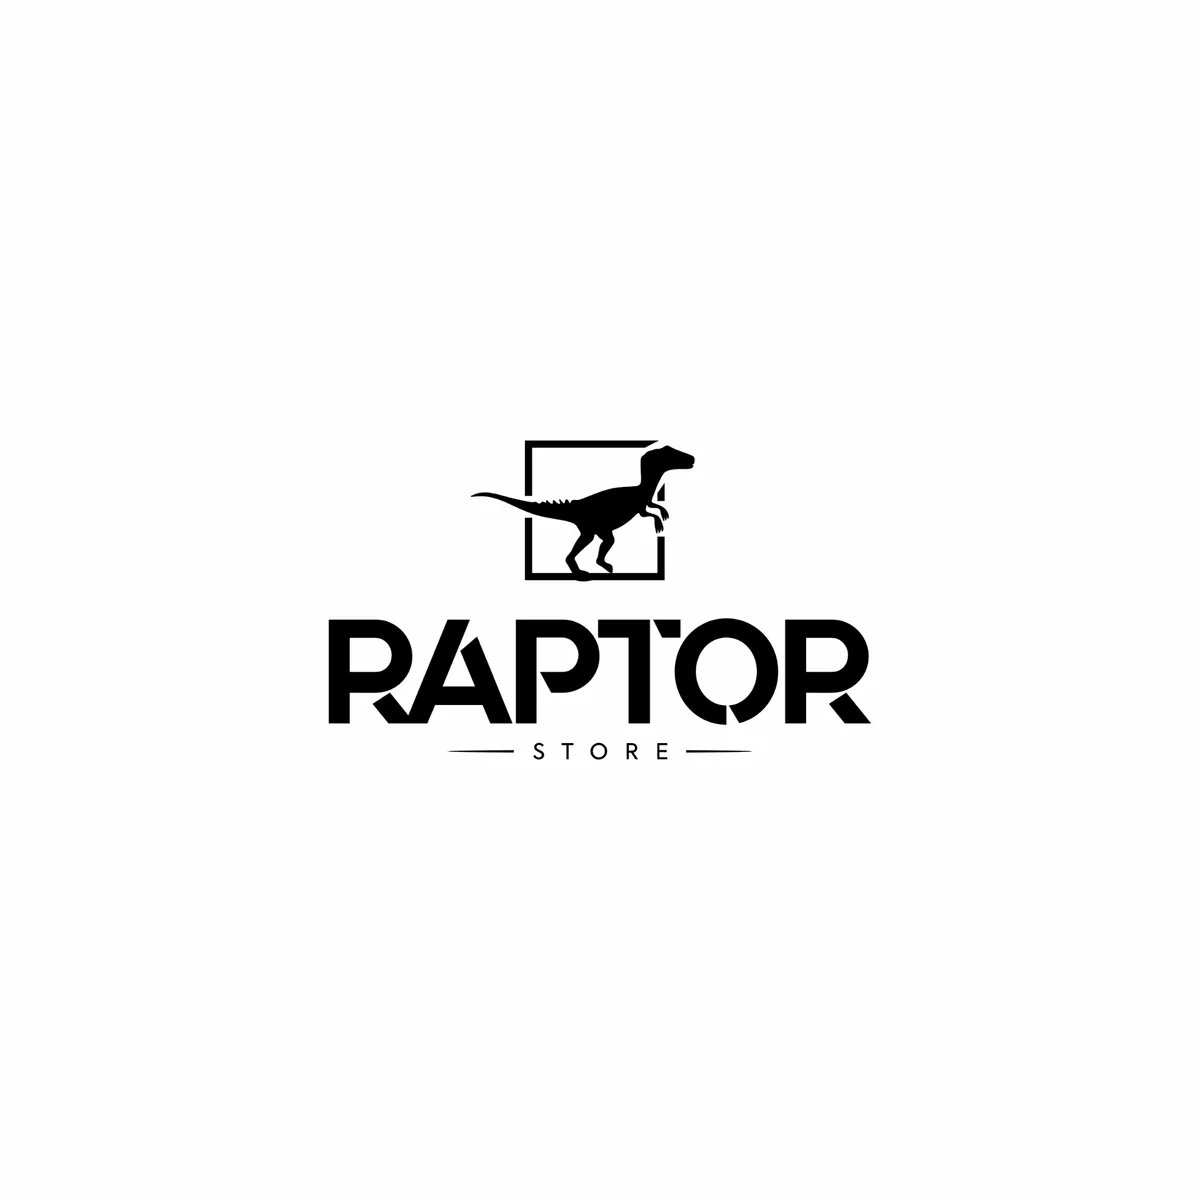 Raptor Store